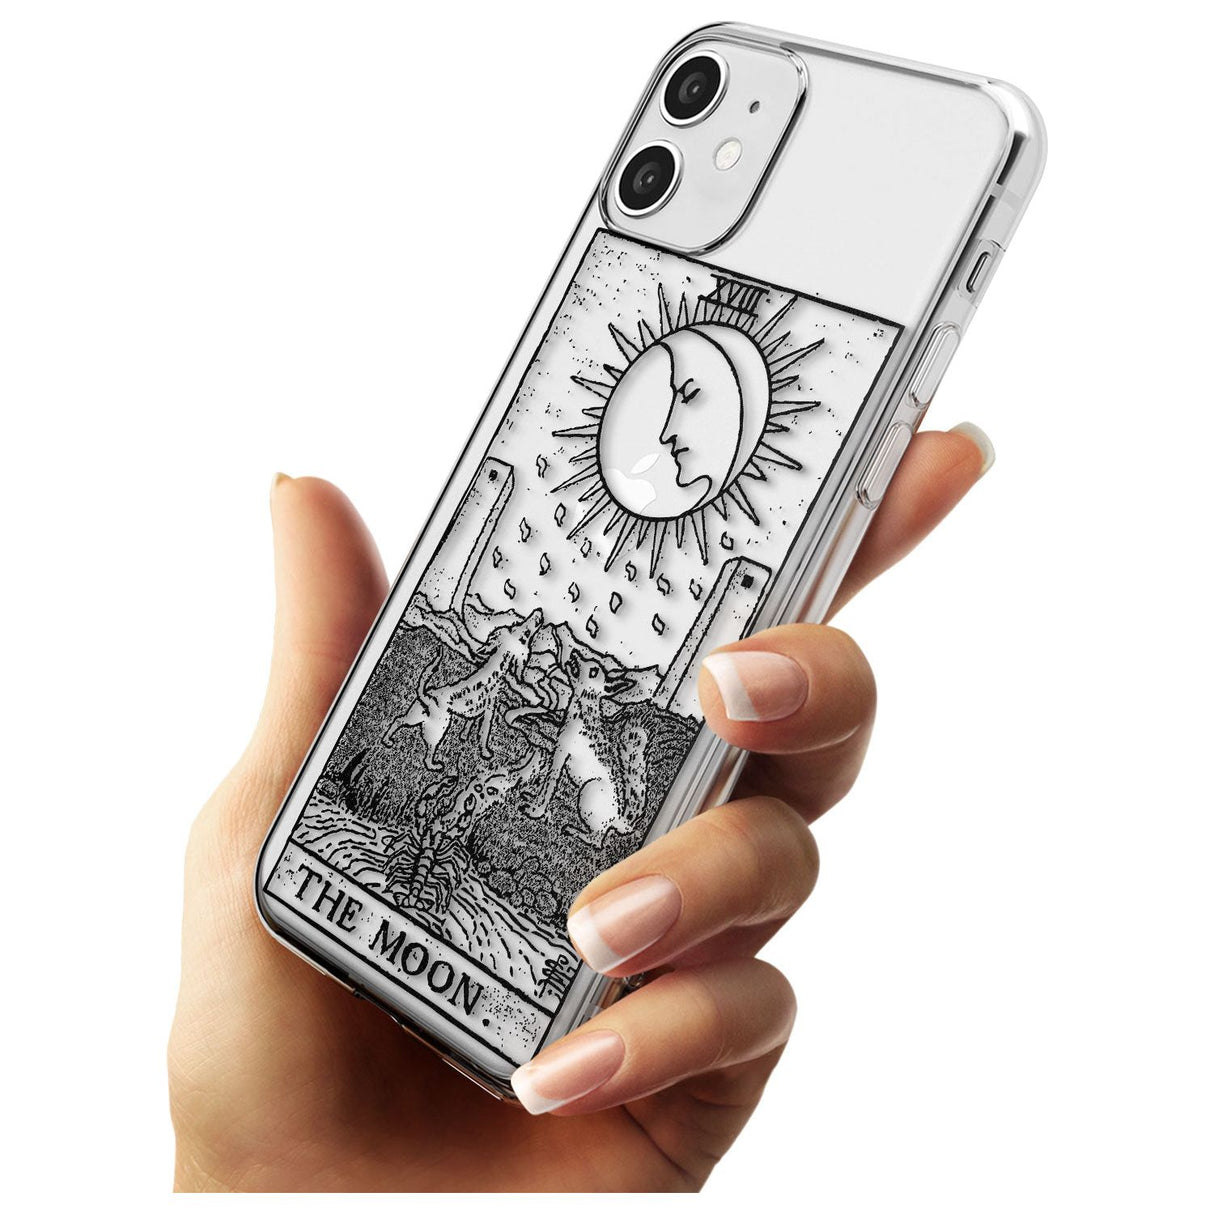 The Moon Tarot Card - Transparent Black Impact Phone Case for iPhone 11